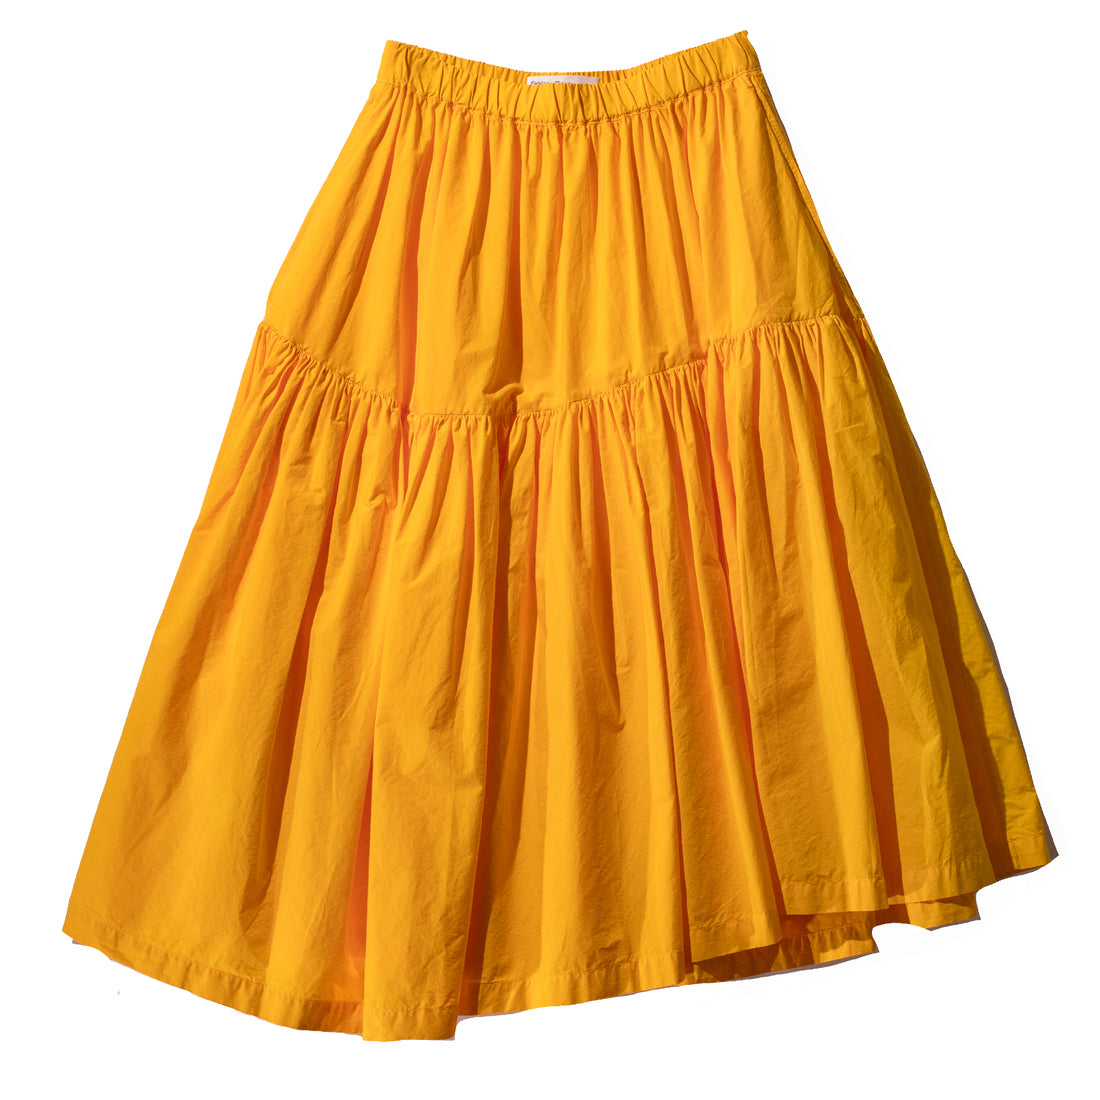 Fabiana Pigna Paru Skirt in Saffron